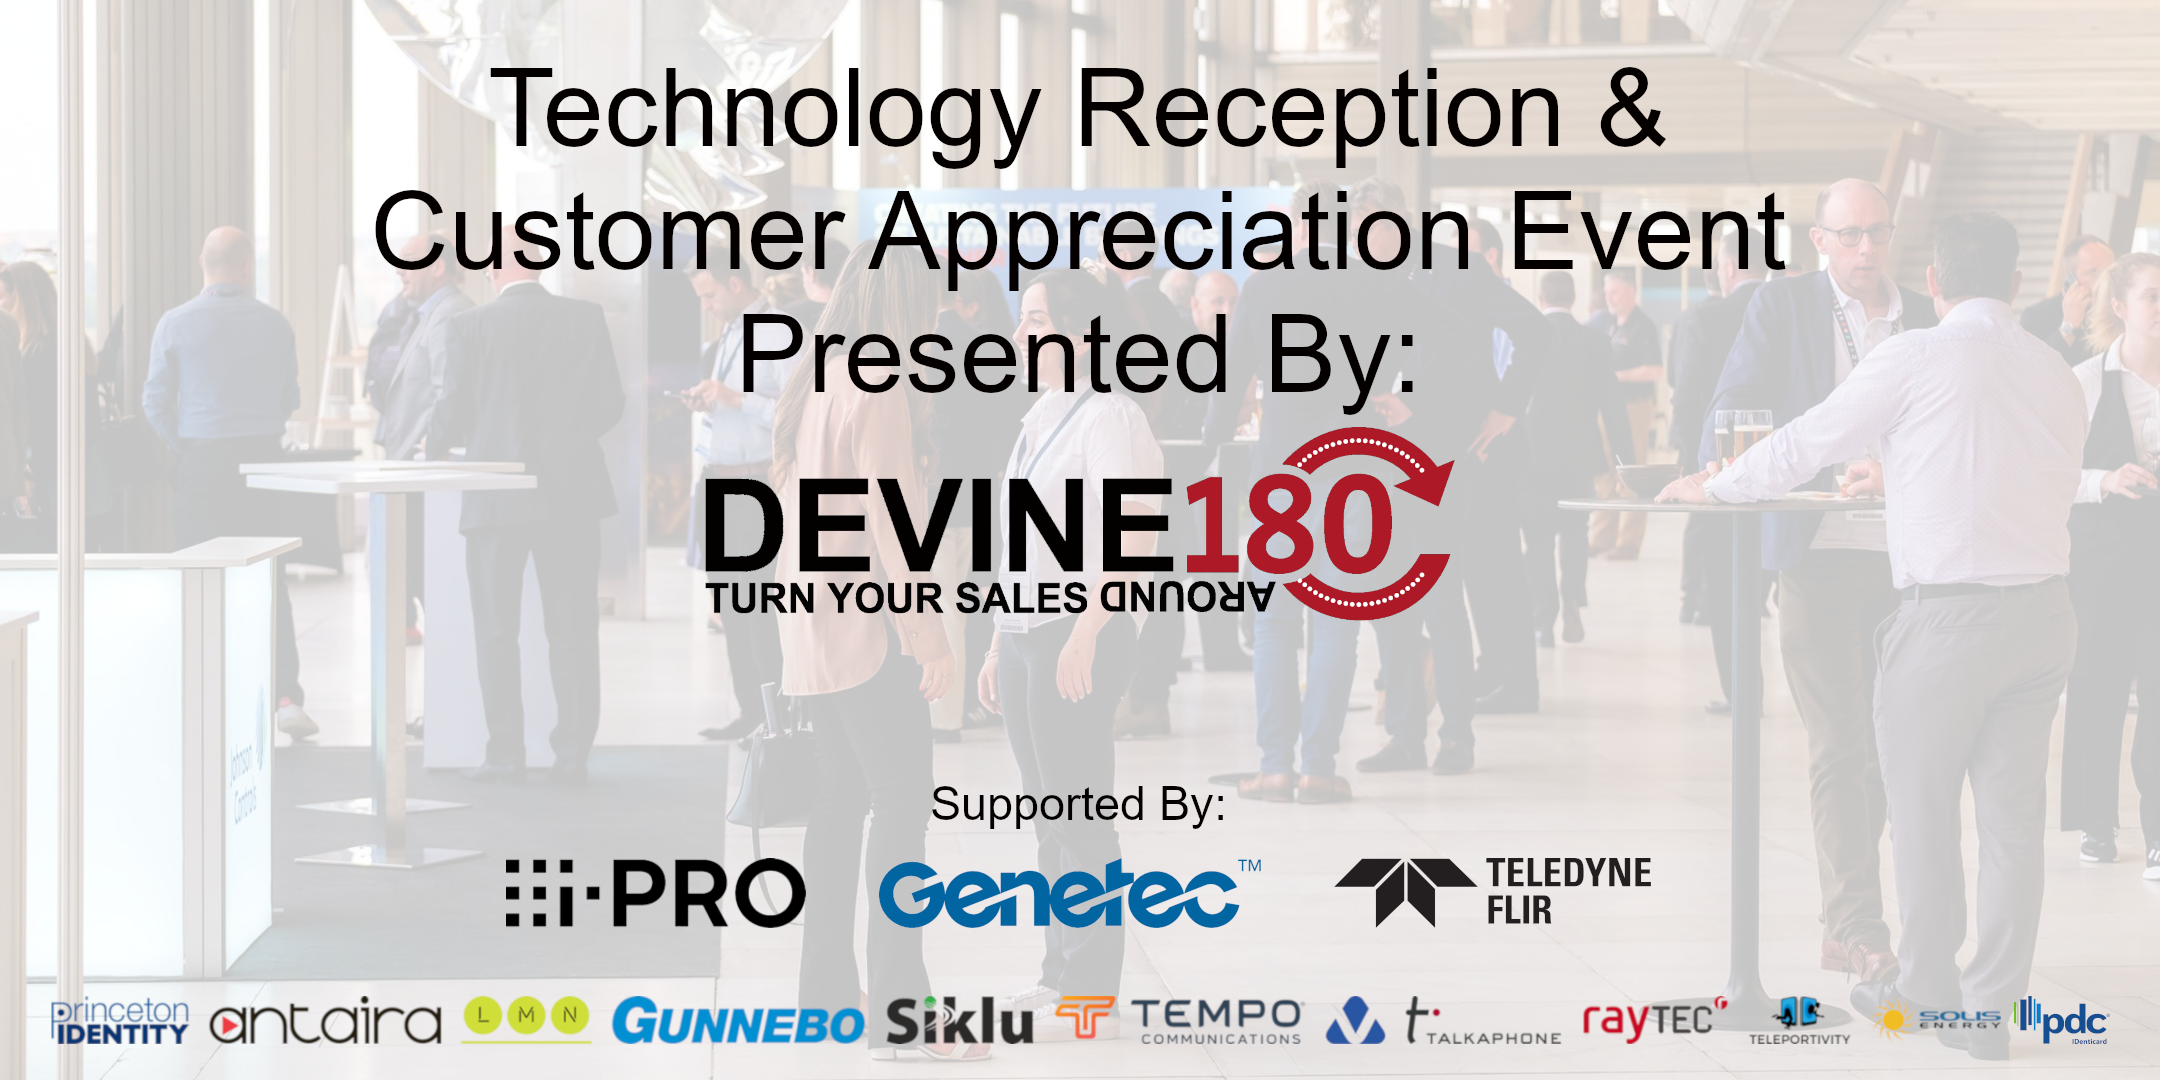 Devine180 Customer Appreciation Event & Technology Roadshow